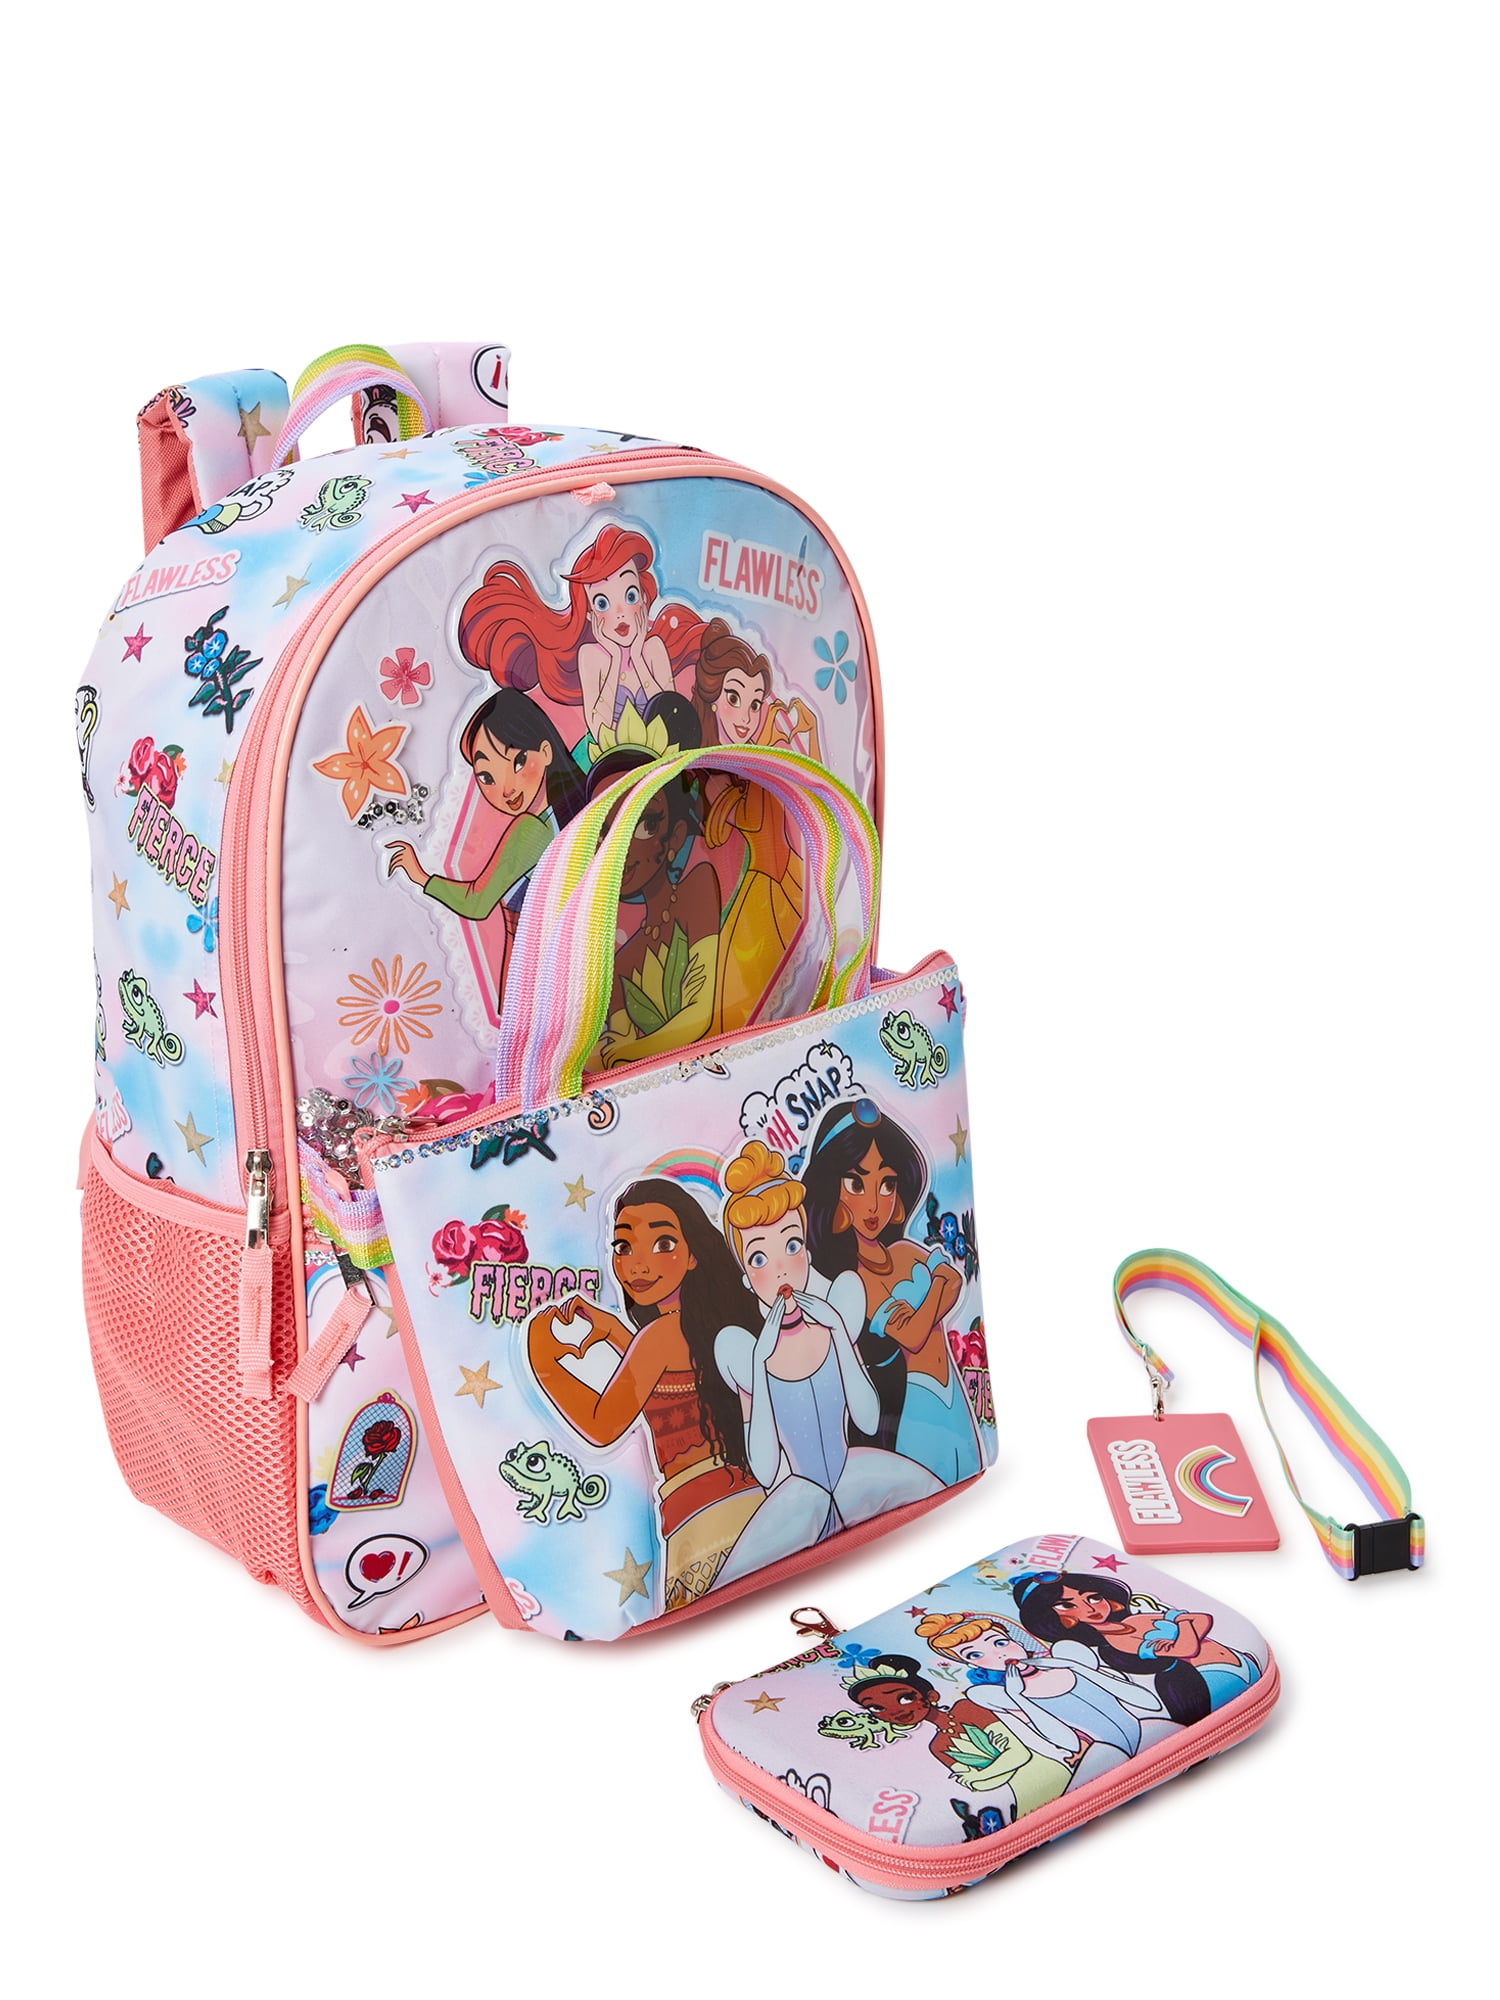 Disney Princess Girls Backpack with Lunch Bag 4-Piece Set Pink Multi-Color  - Walmart.com